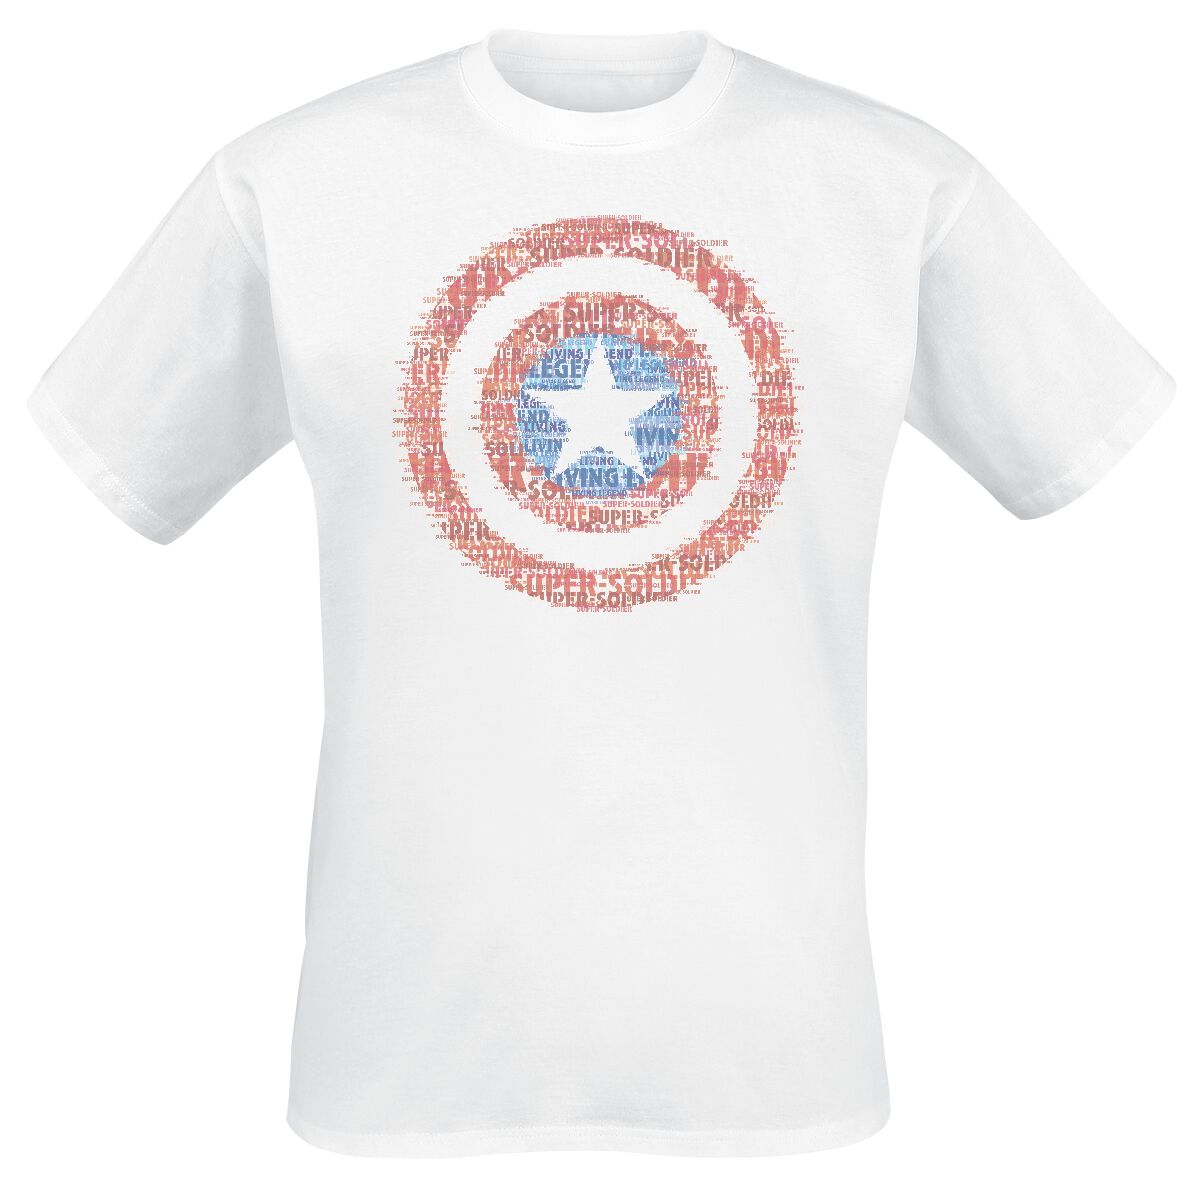 Captain America Super Soldier T-Shirt white